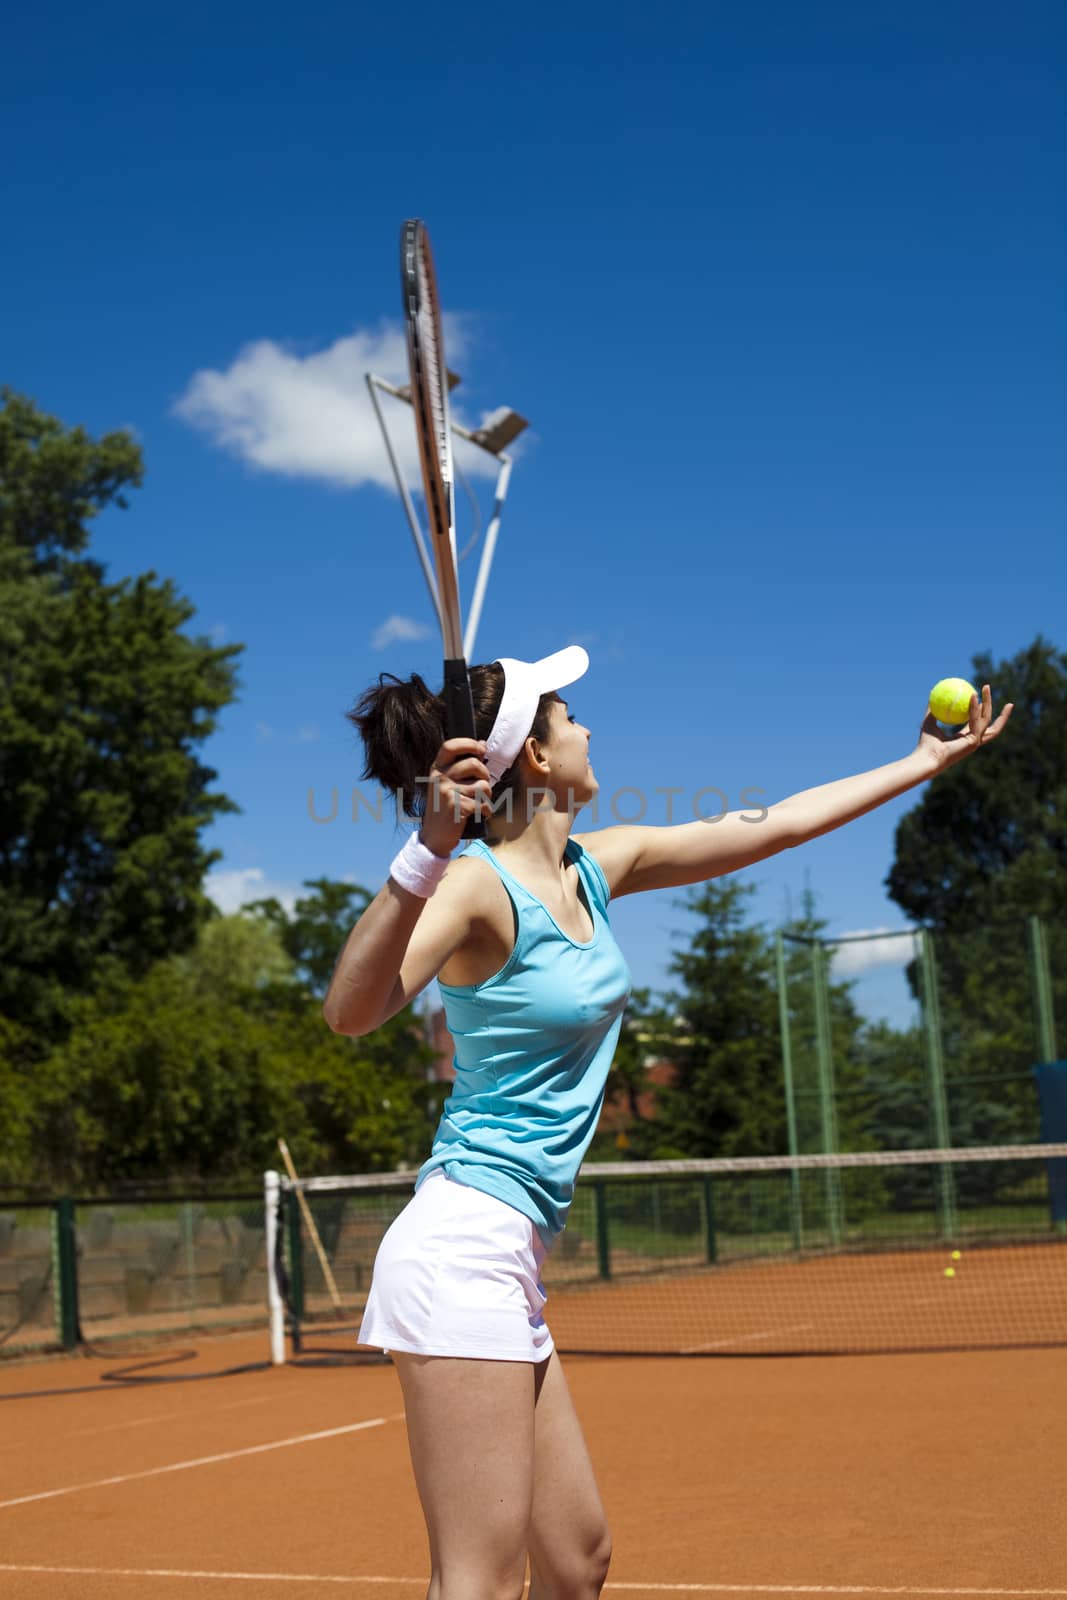 Woman playing tennis, natural colorful tone by JanPietruszka